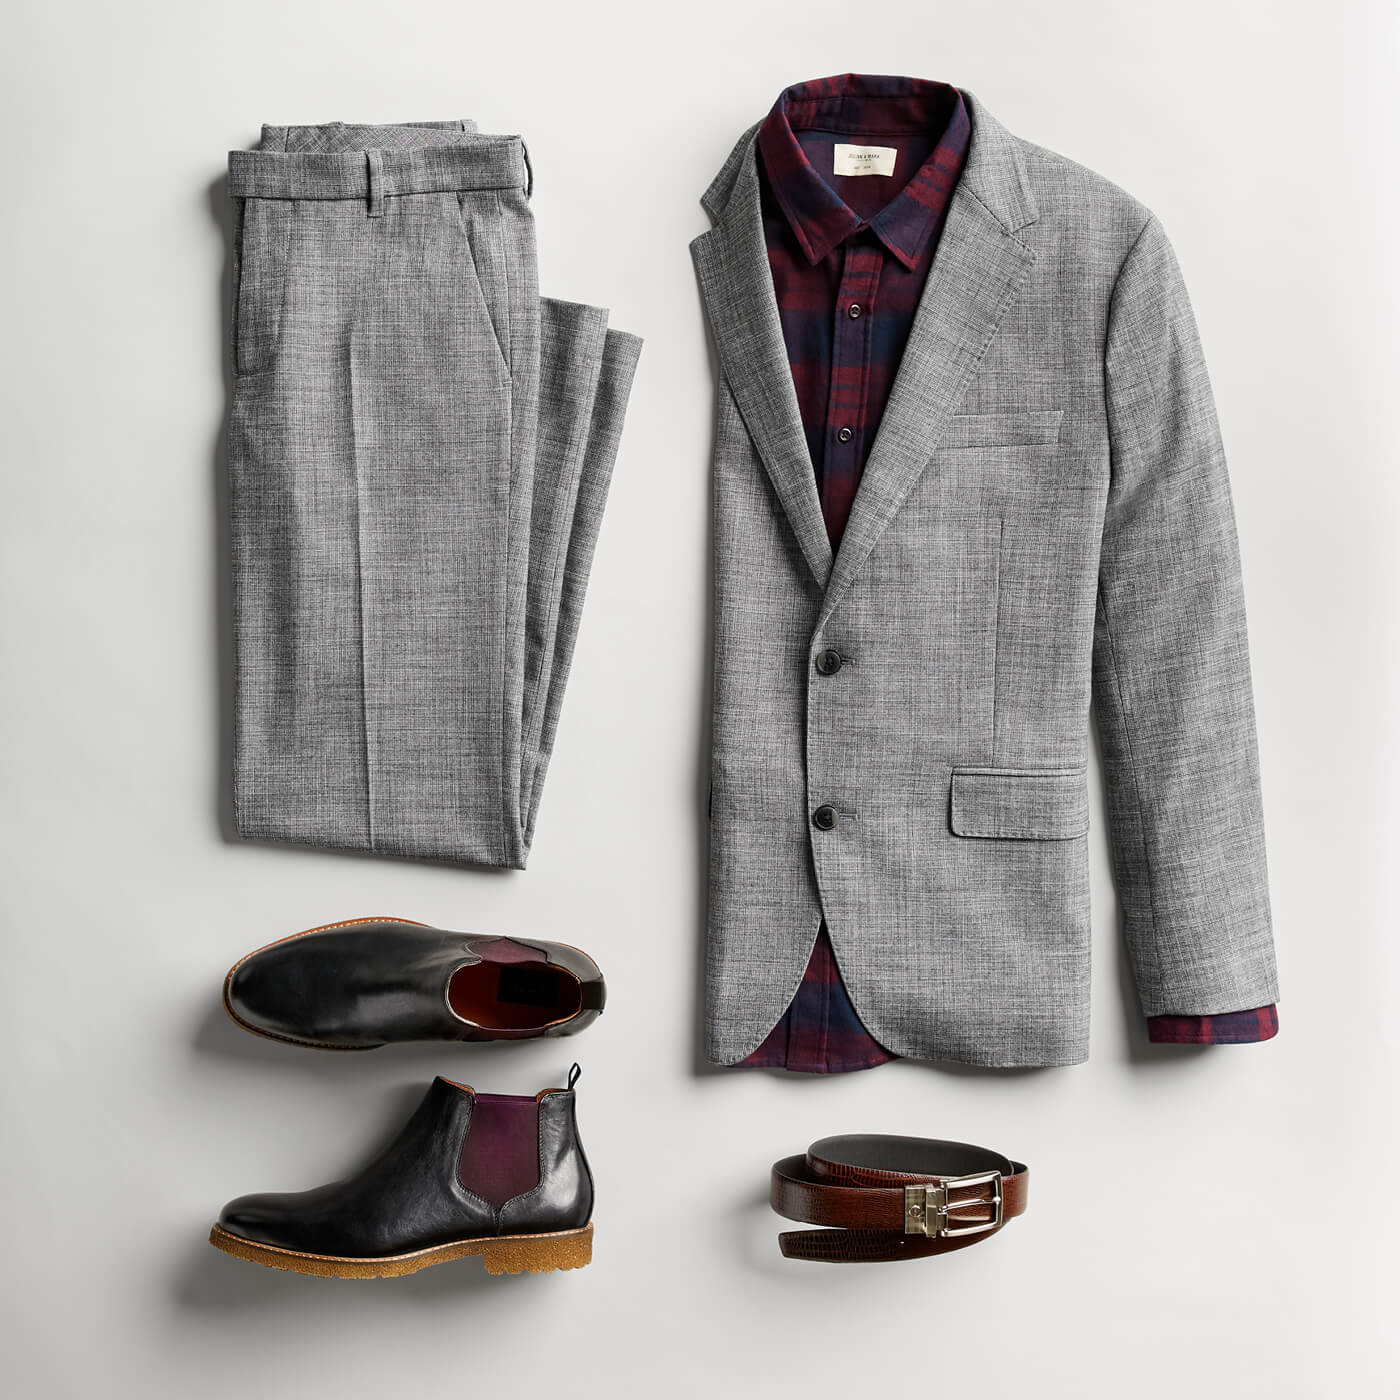 How to Wear Suits & Separates | Stitch Fix Men